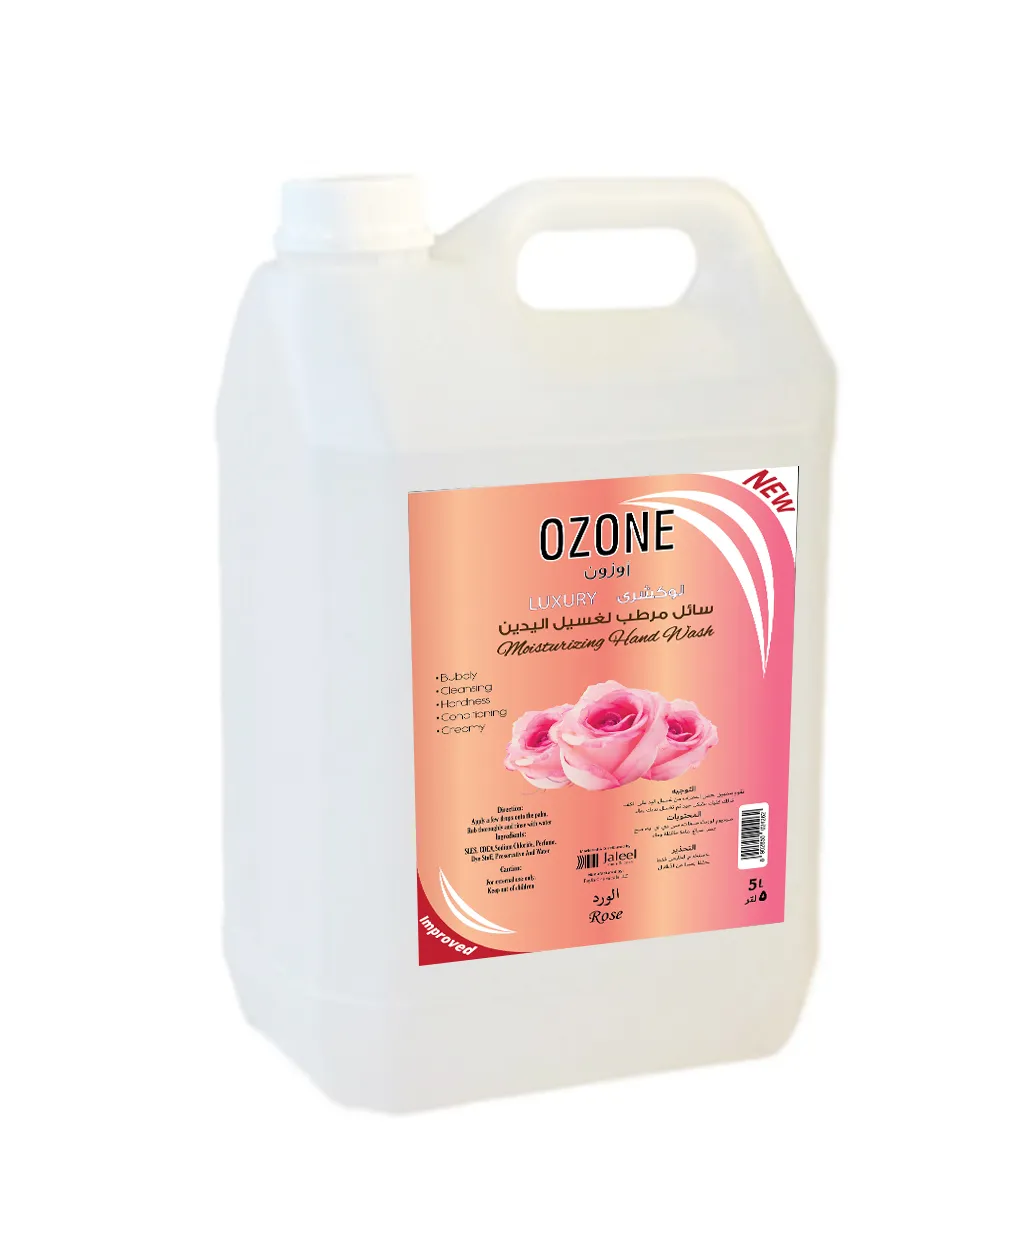 Ozone Rose Luxury Hand Wash, 5 Liter